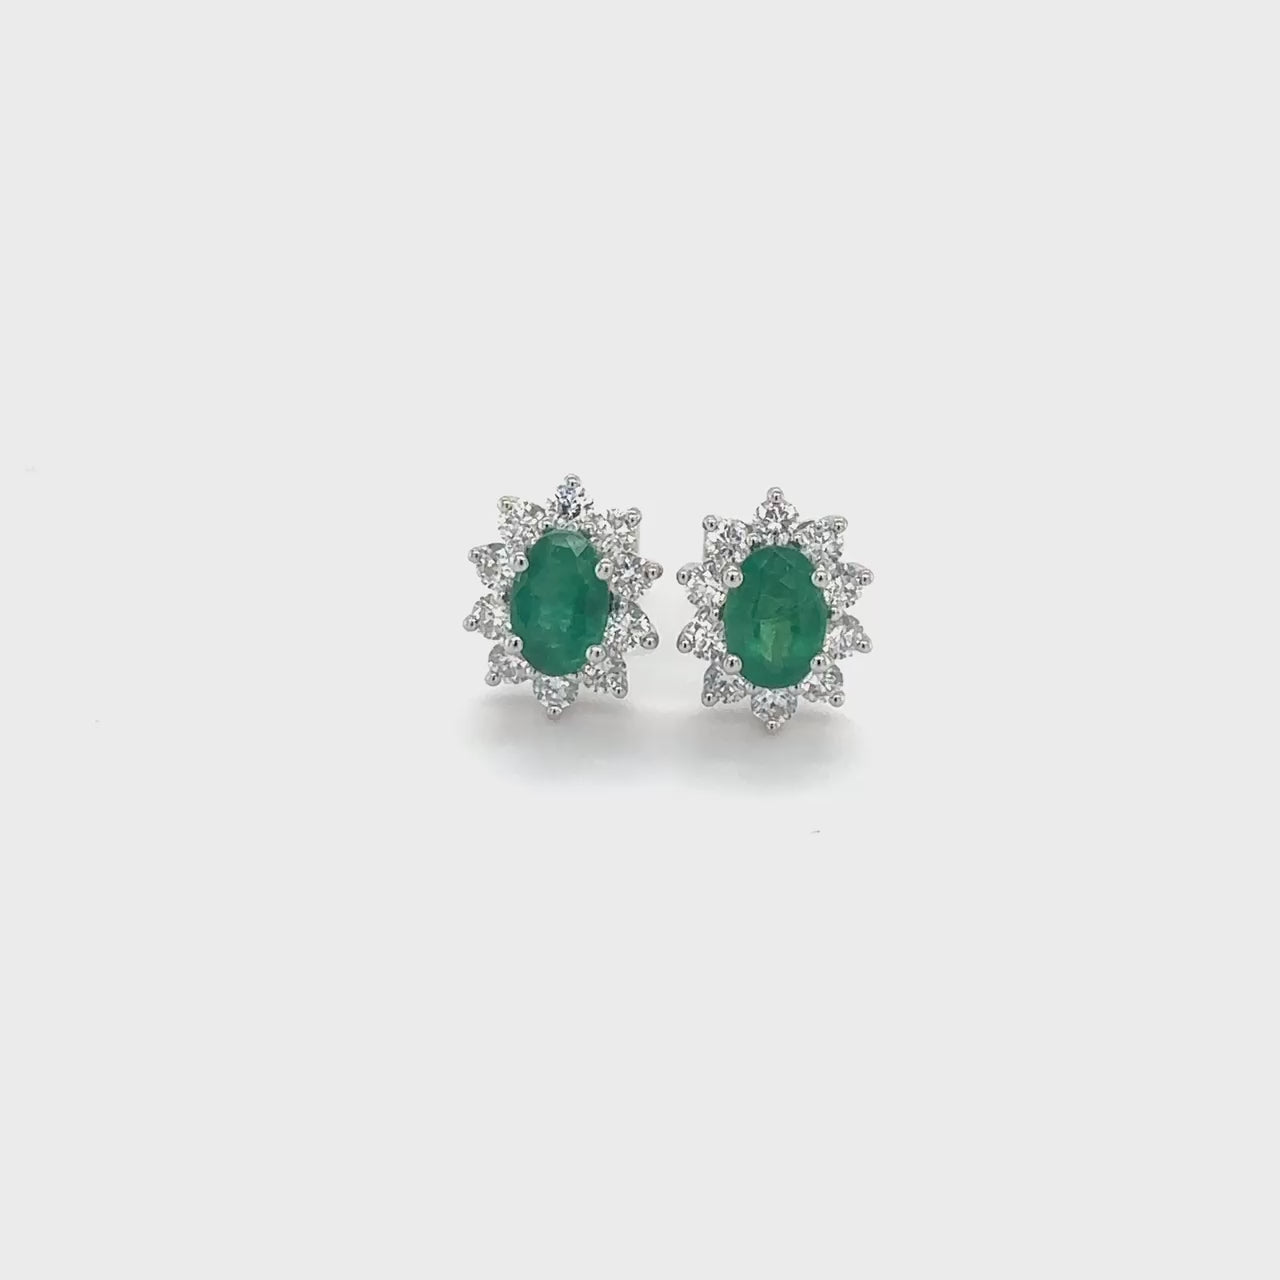 Oval, Emerald, Diamond, Halo, Stud Earrings